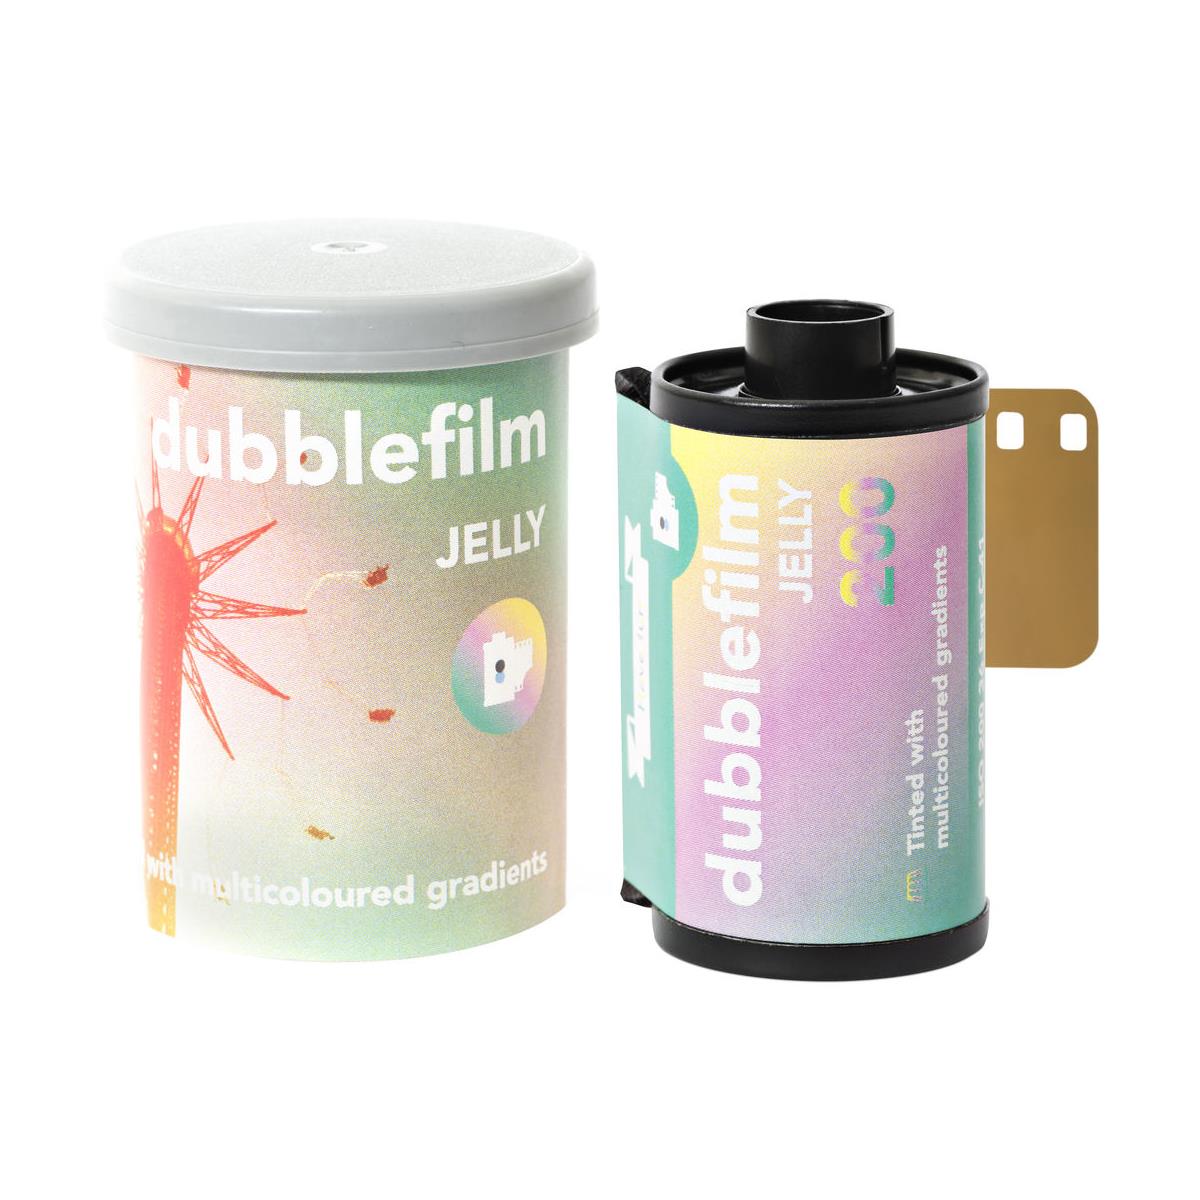 dubble film Jelly 200 Color Negative Film (35mm Roll Film, 36 Exposures)